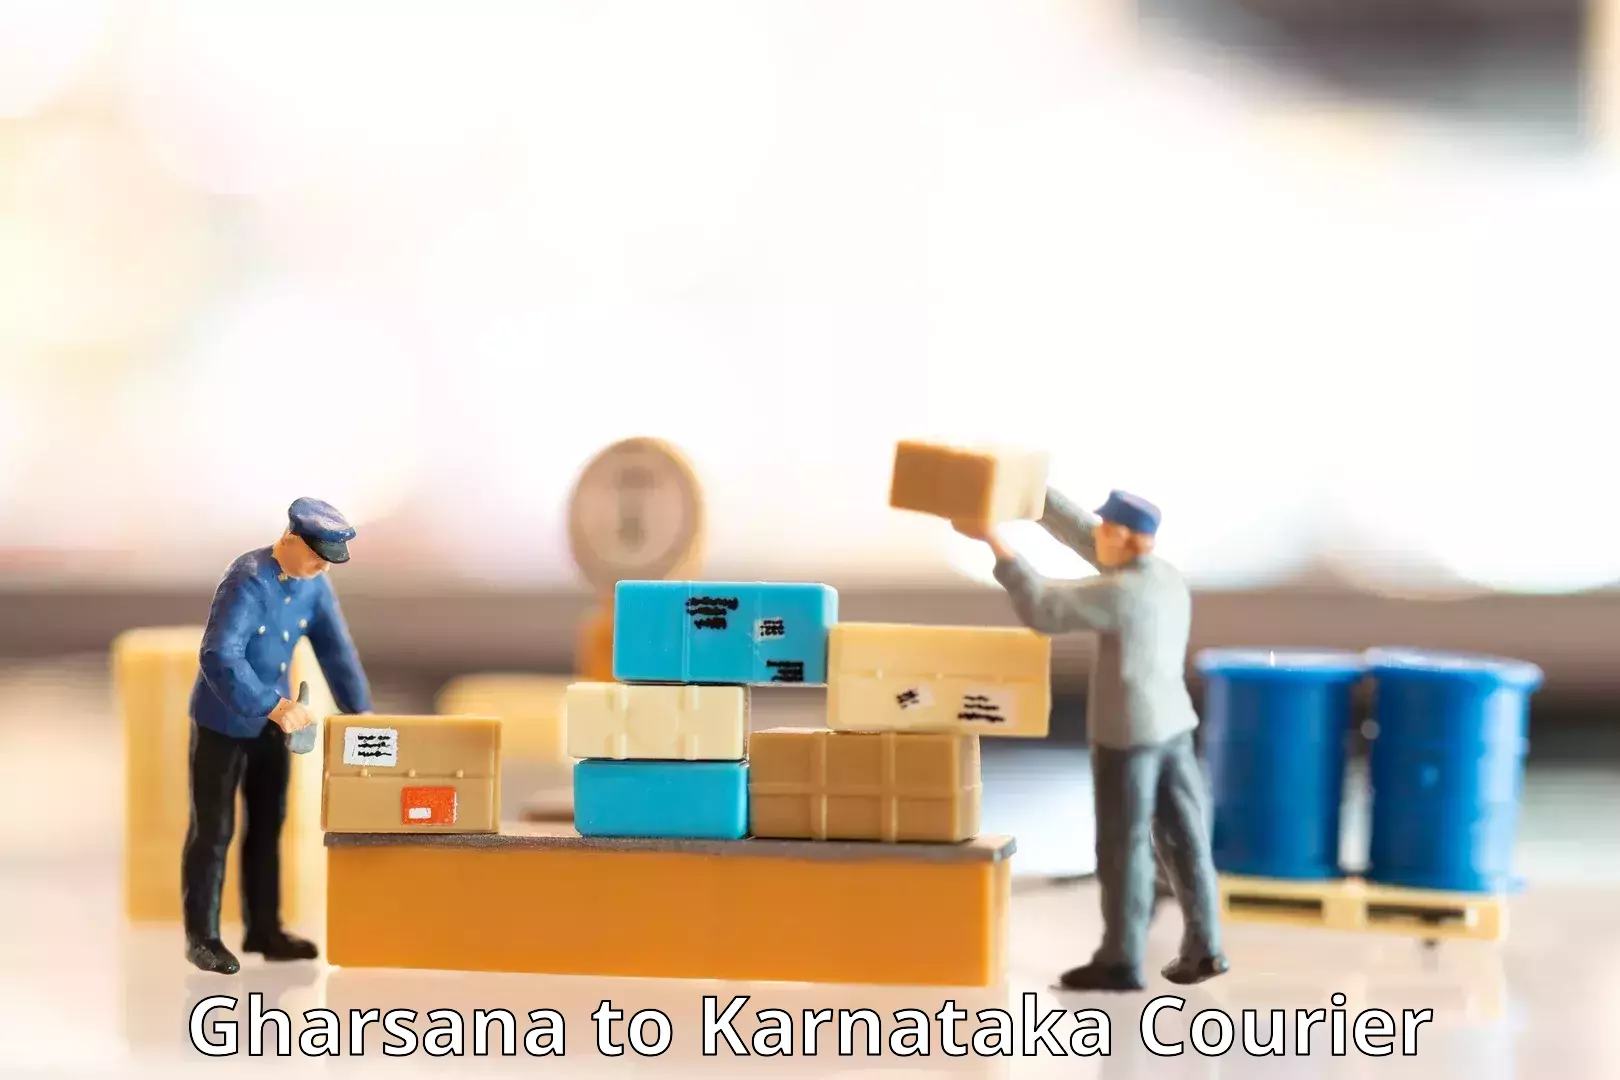 Courier service innovation Gharsana to Mangalore